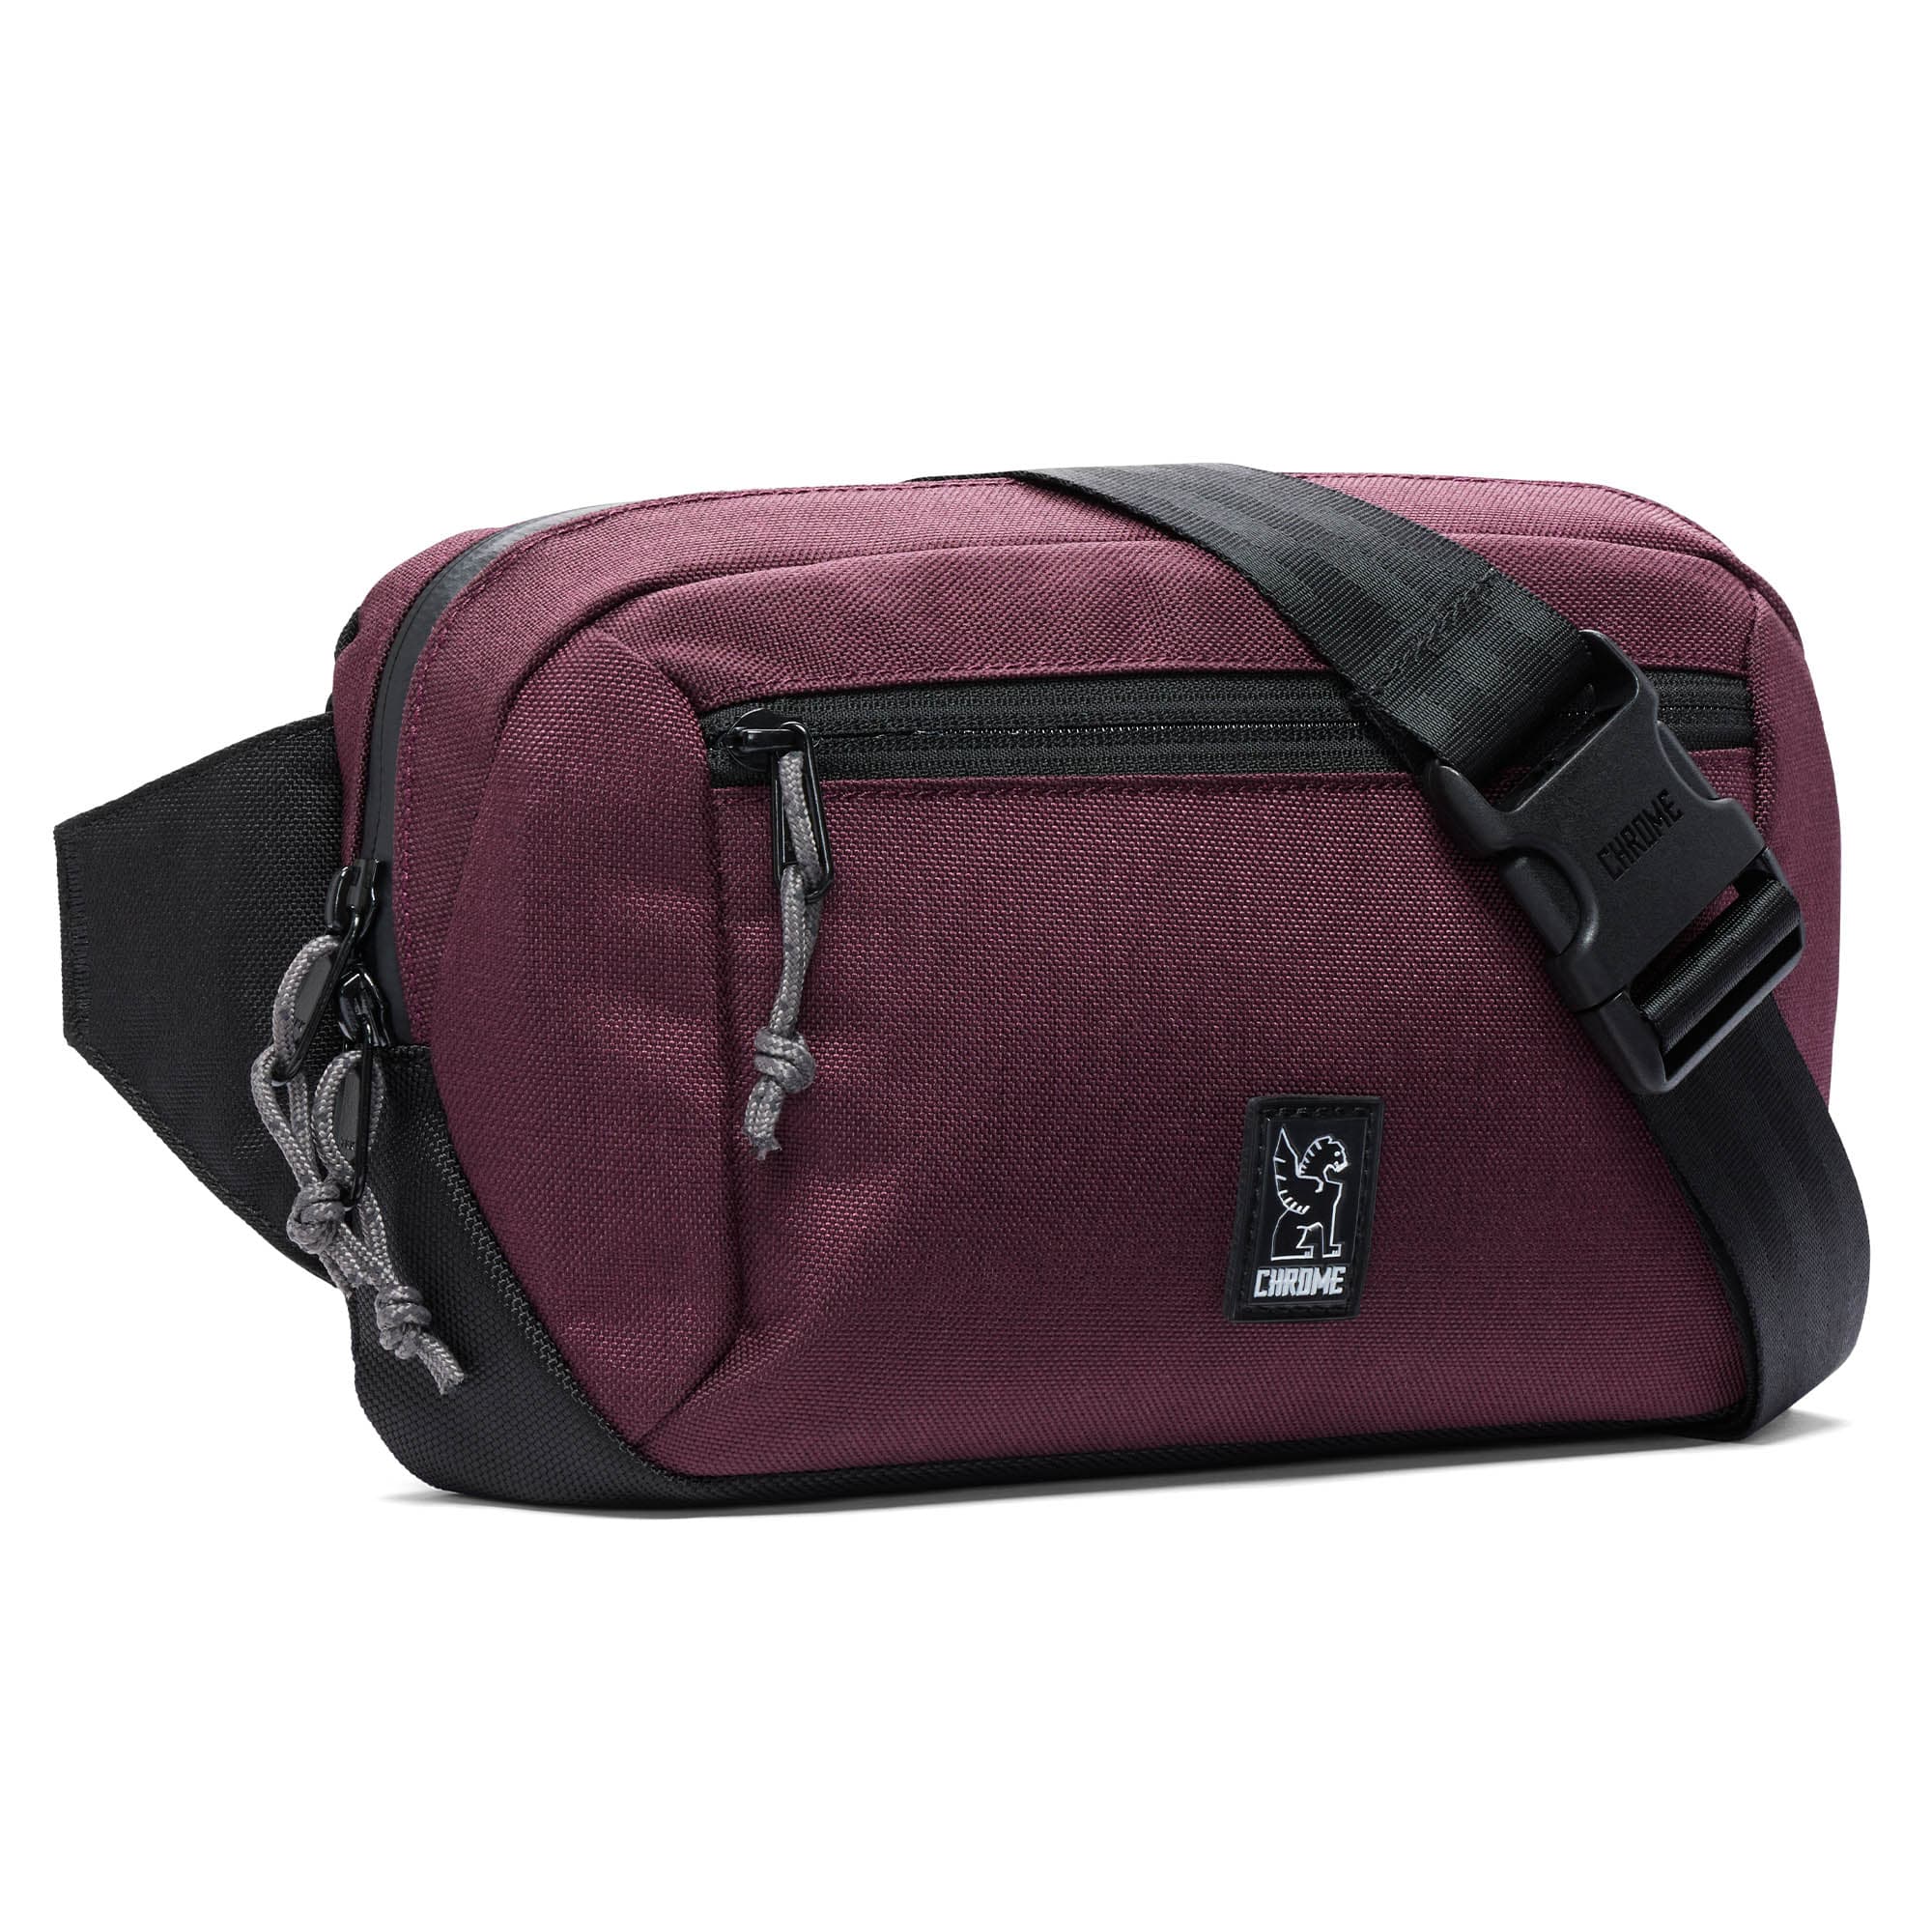 Ziptop Waistpack in purple color #color_royale